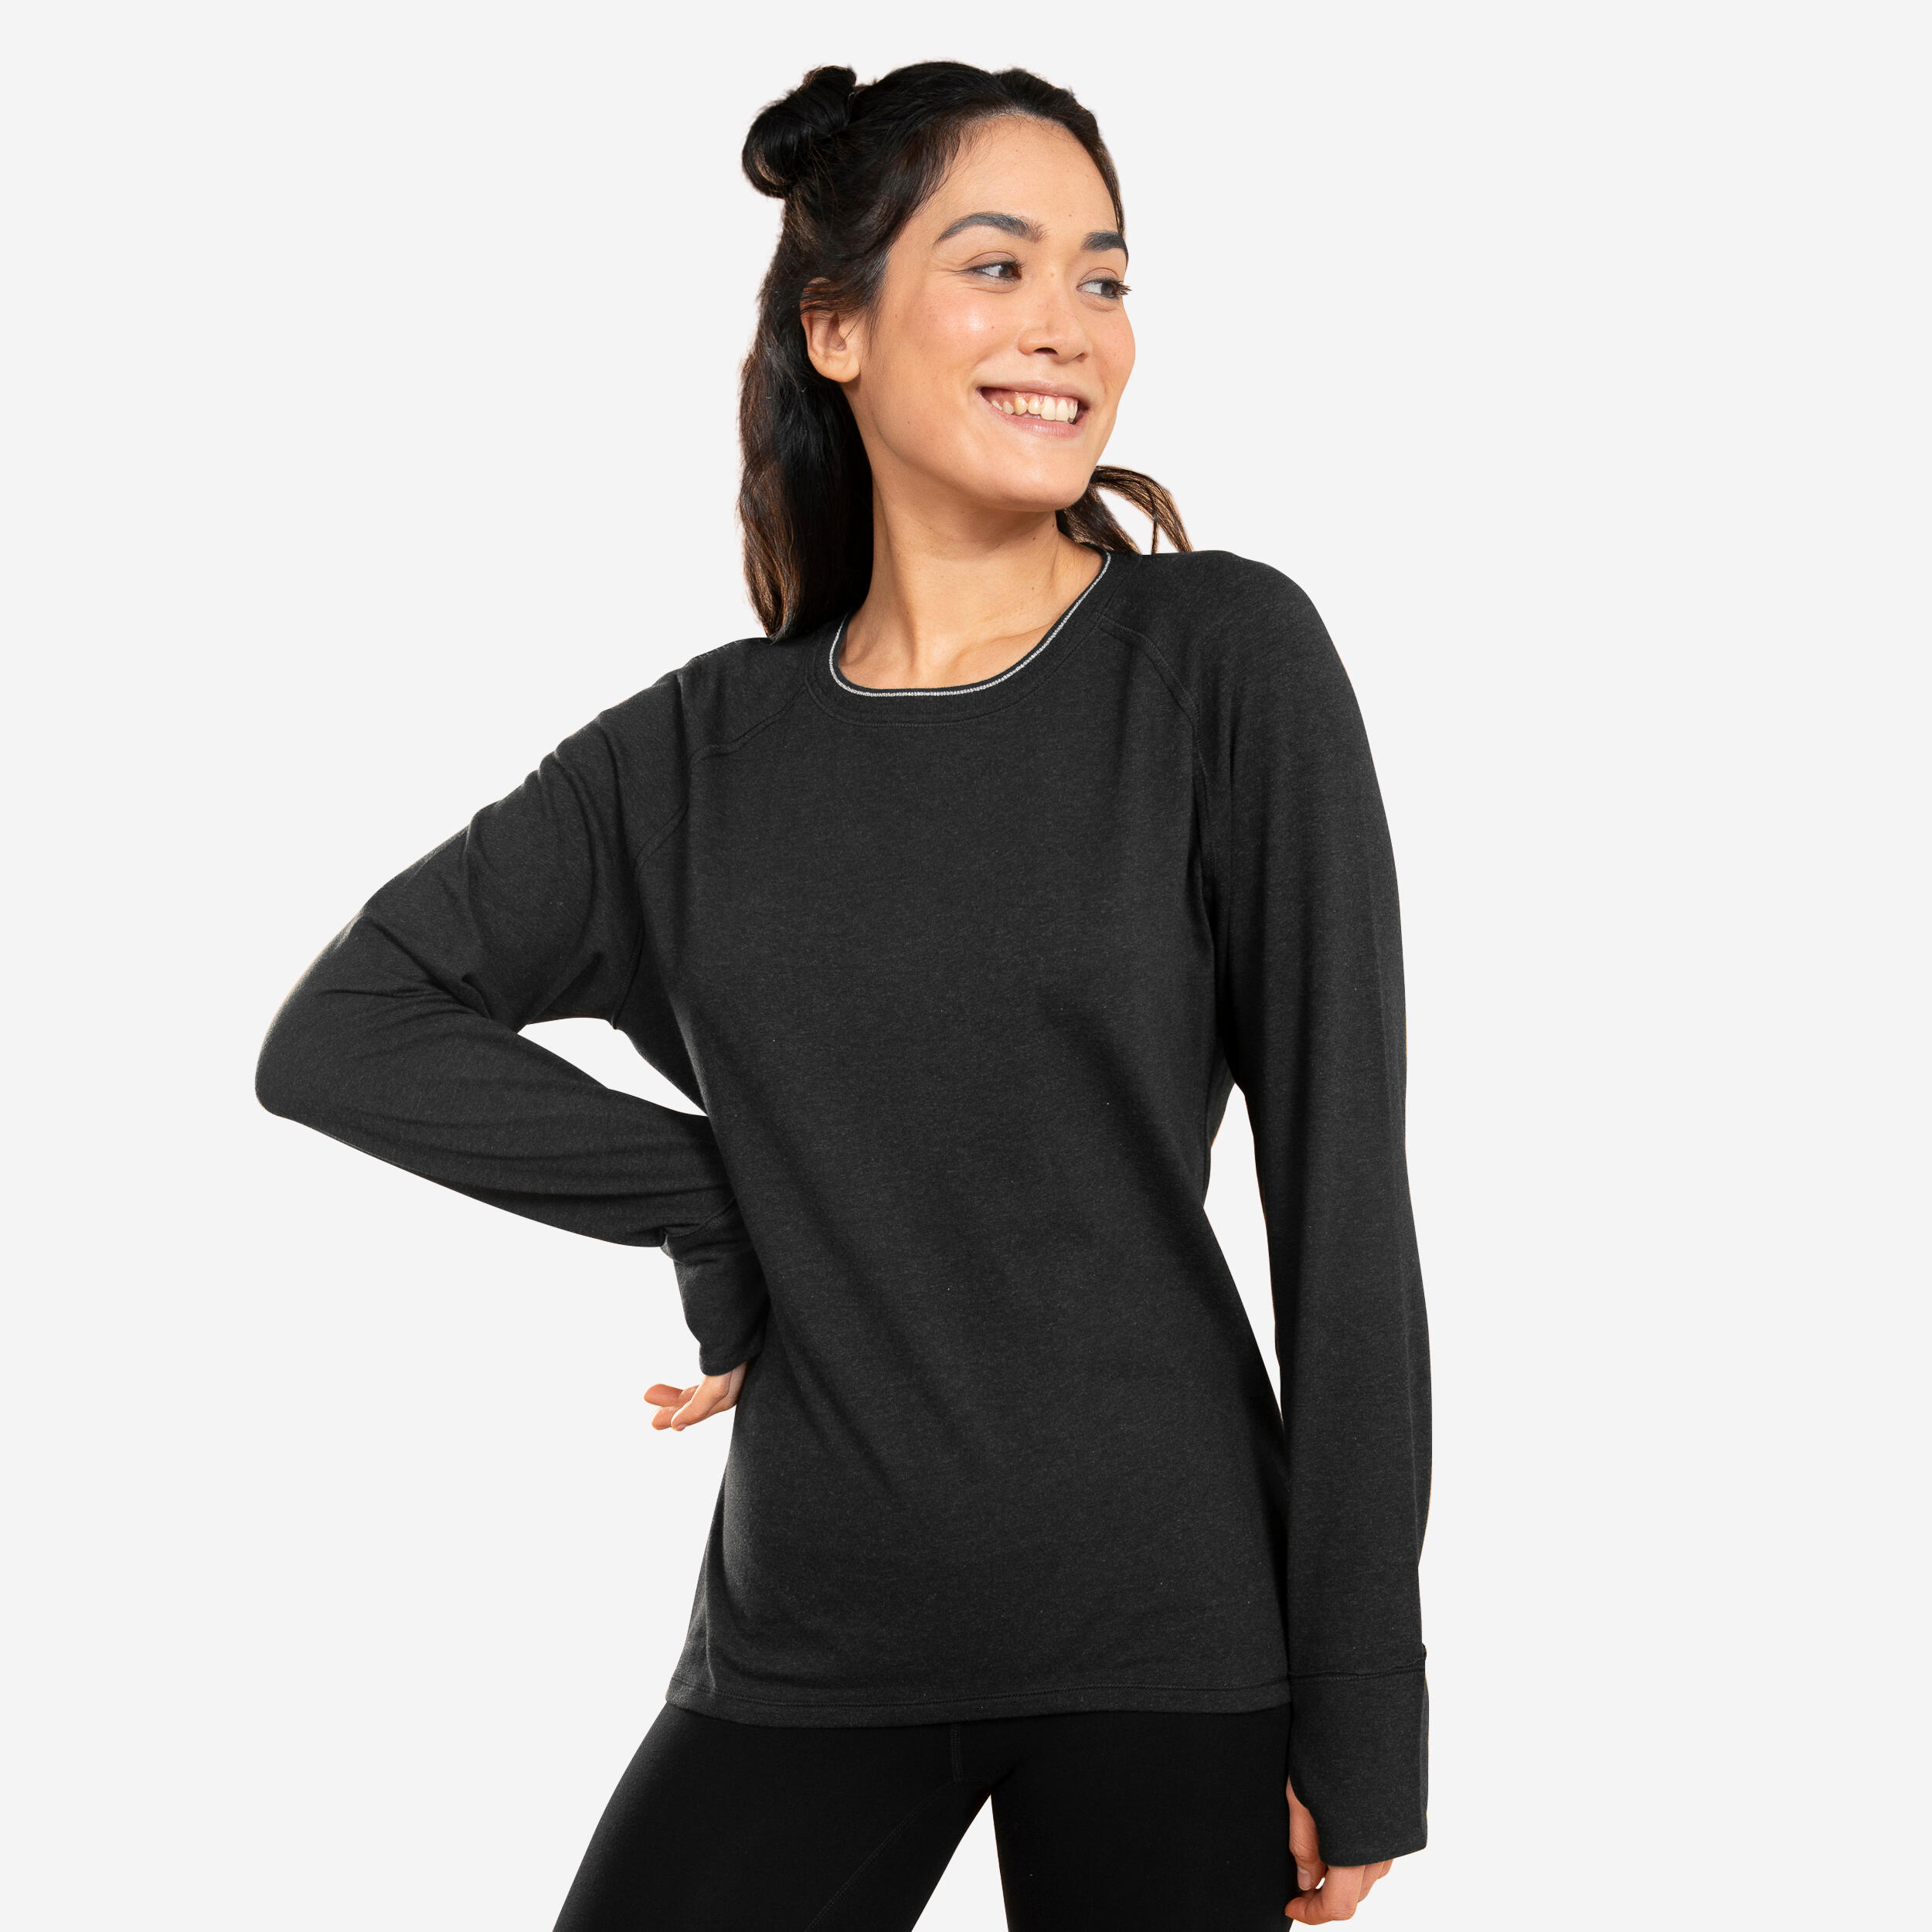 Women's Long-Sleeved Yoga T-Shirt - Black KIMJALY